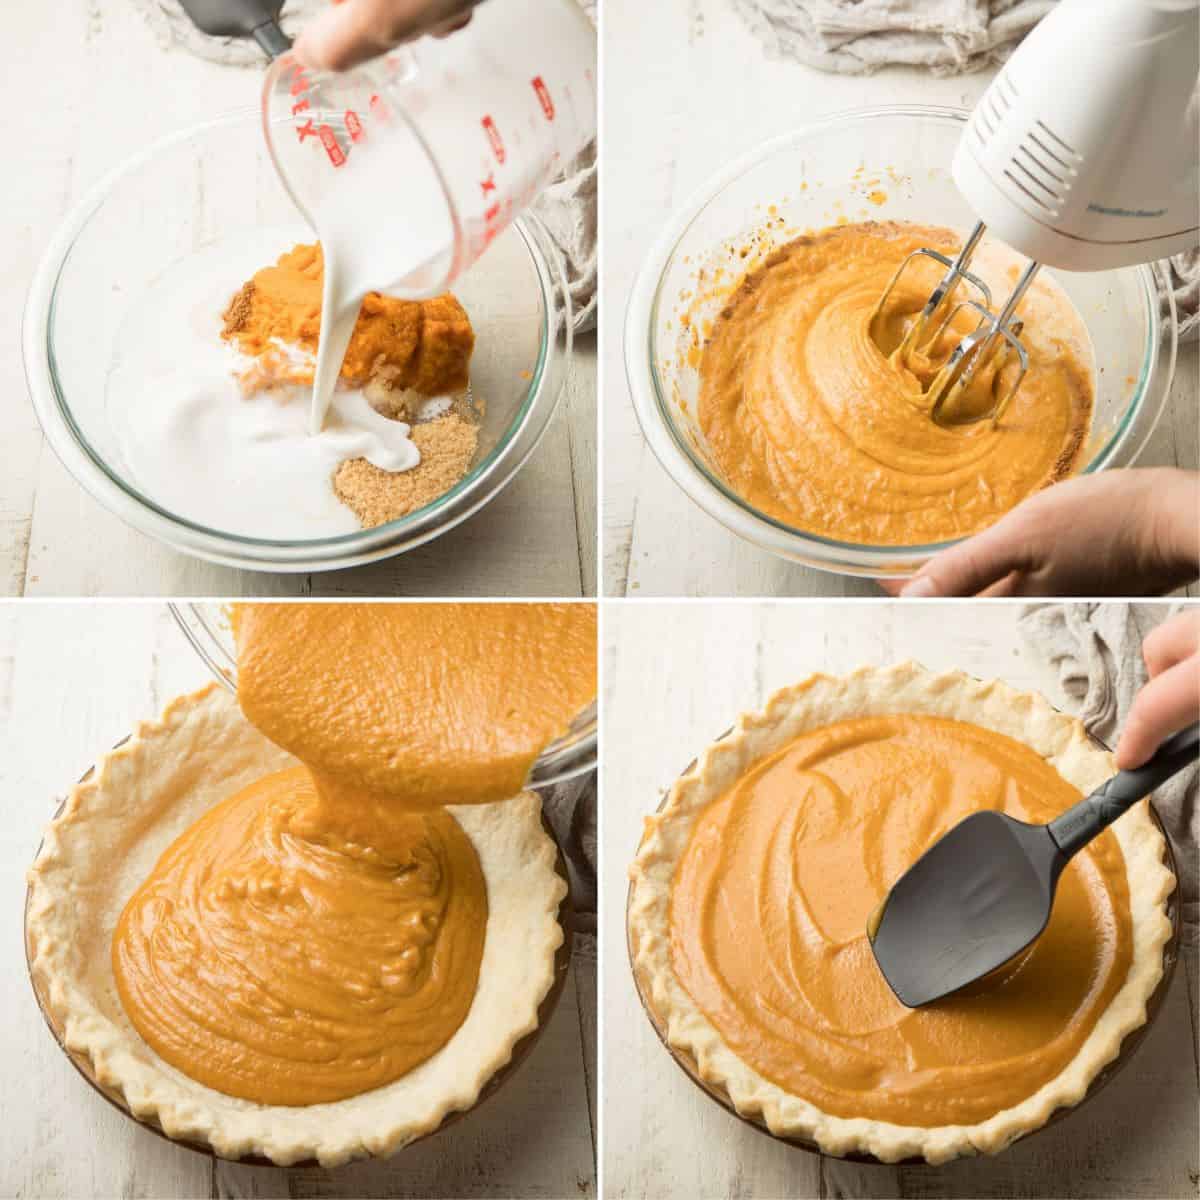 Collage showing 4 steps for making Vegan Pumpkin Pie.